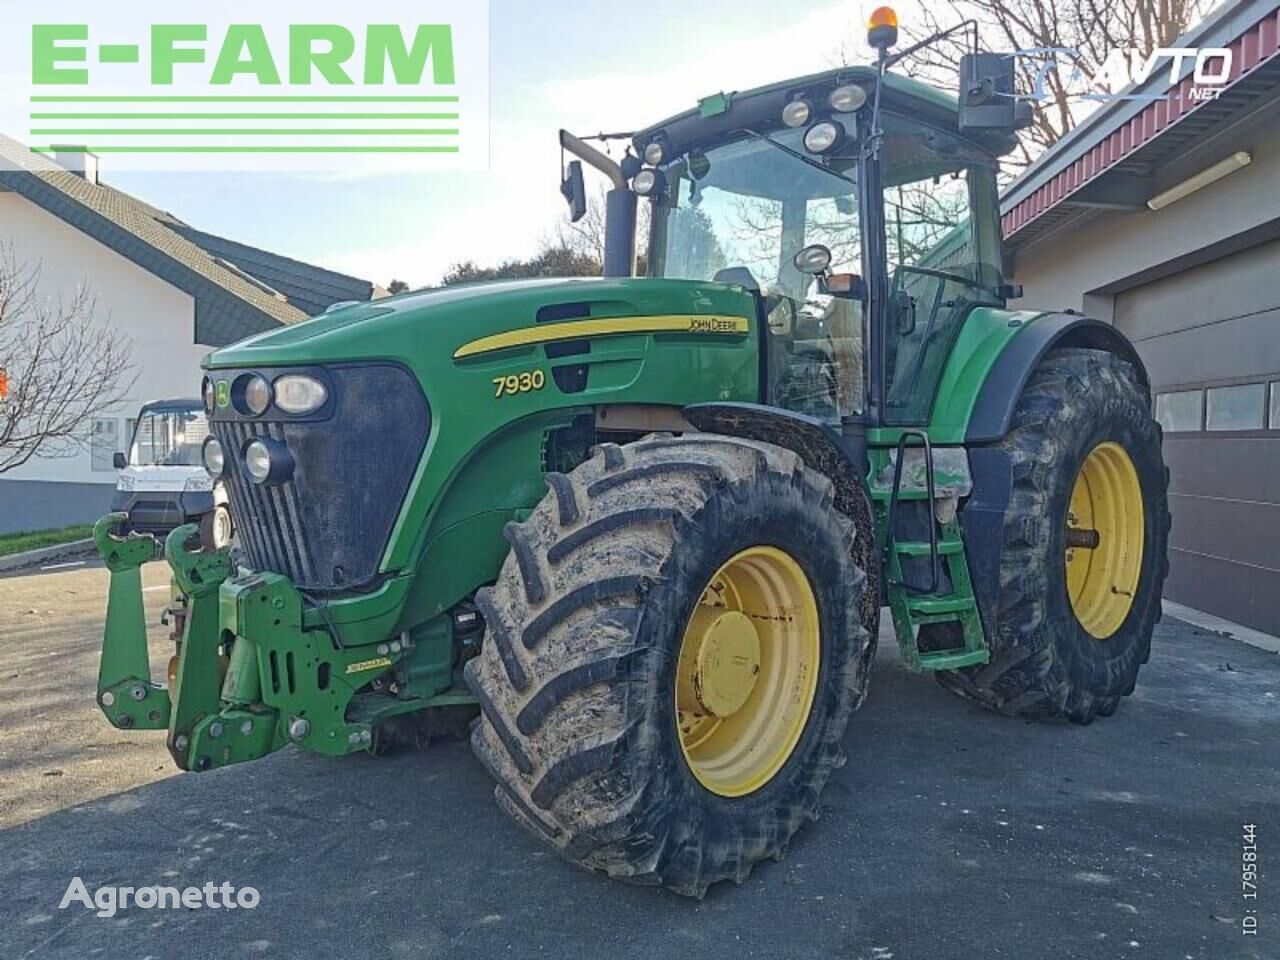 7930 wheel tractor